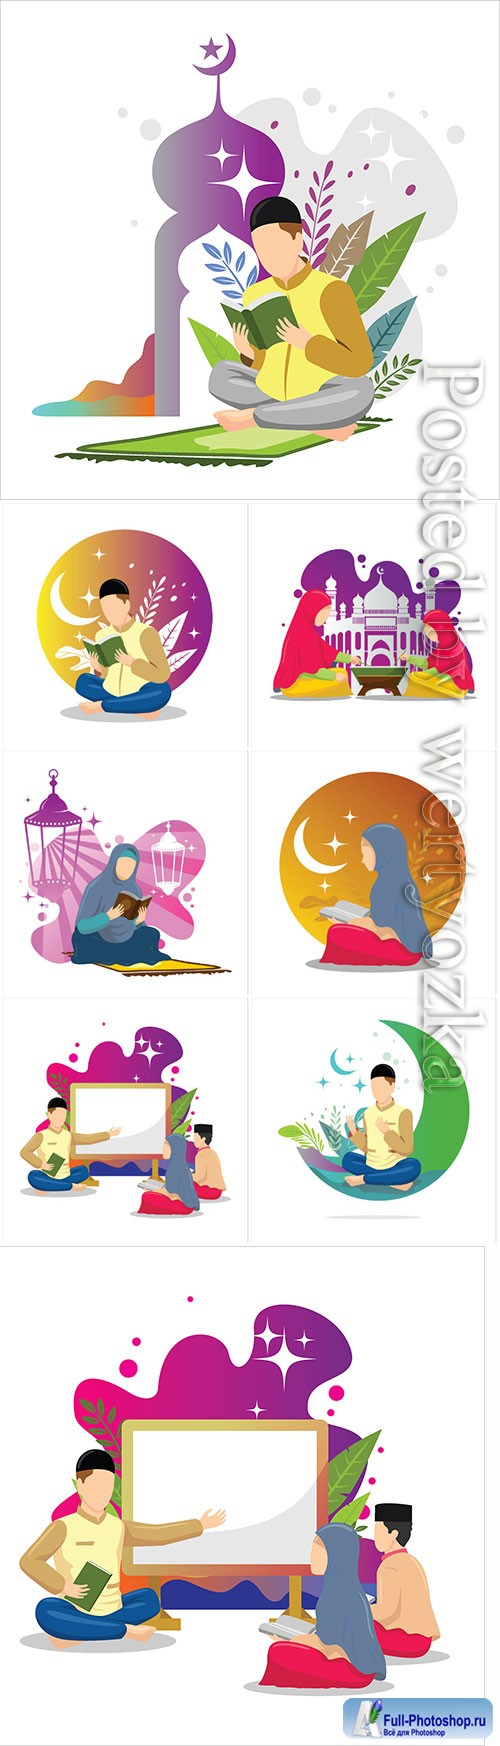 Eid mubarak vector illustration 